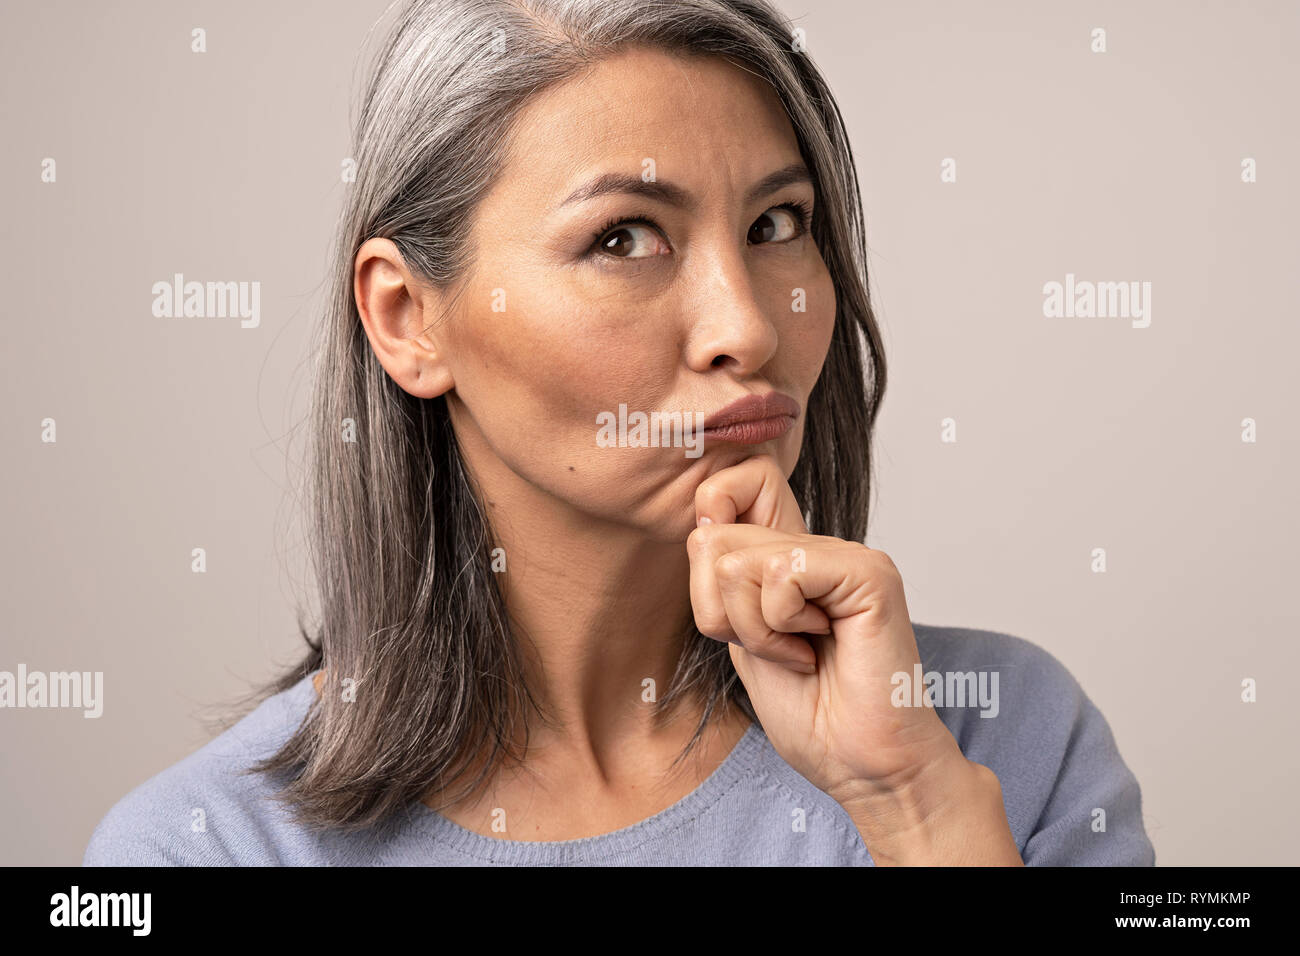 Beautiful mature woman blows lips while touching her chin Stock Photo